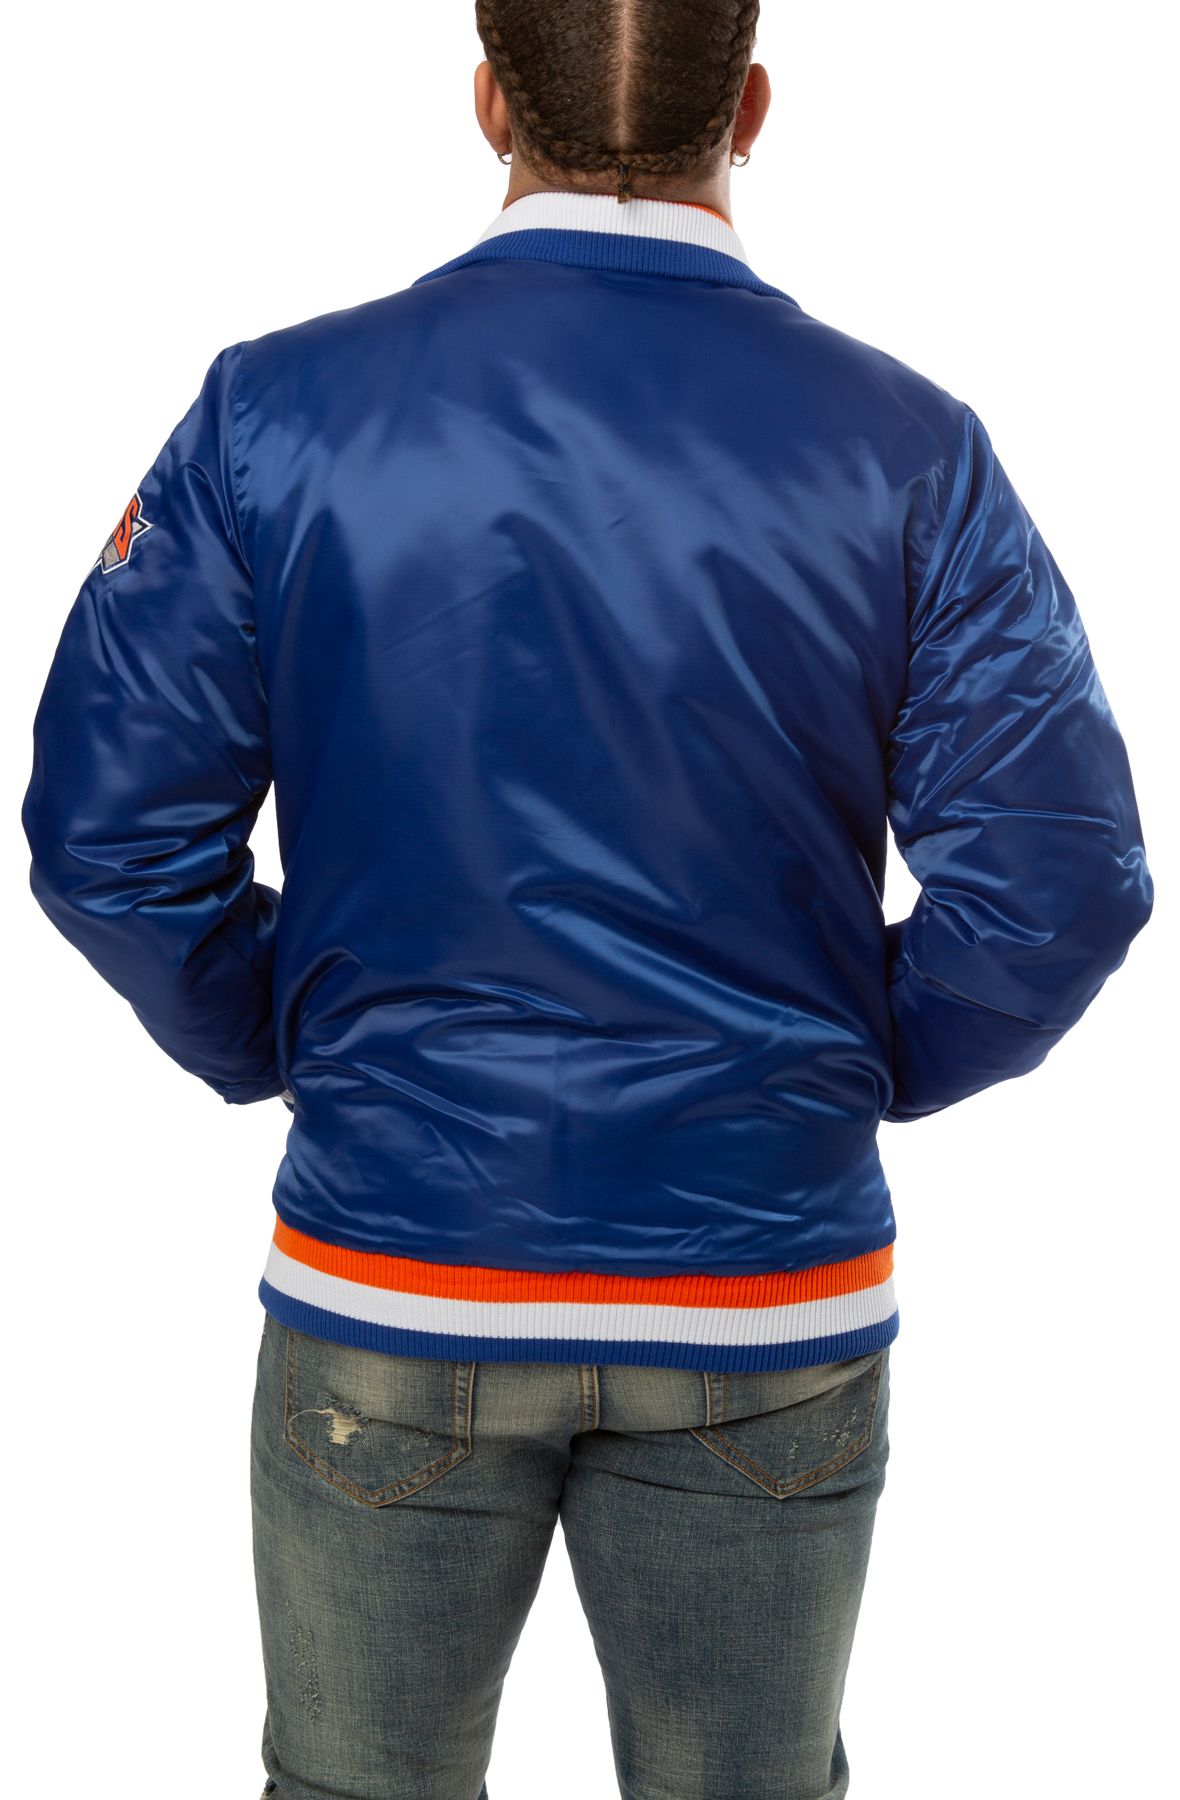 STARTER New York Knicks Black History Month Jacket LS230501-NYK - Shiekh